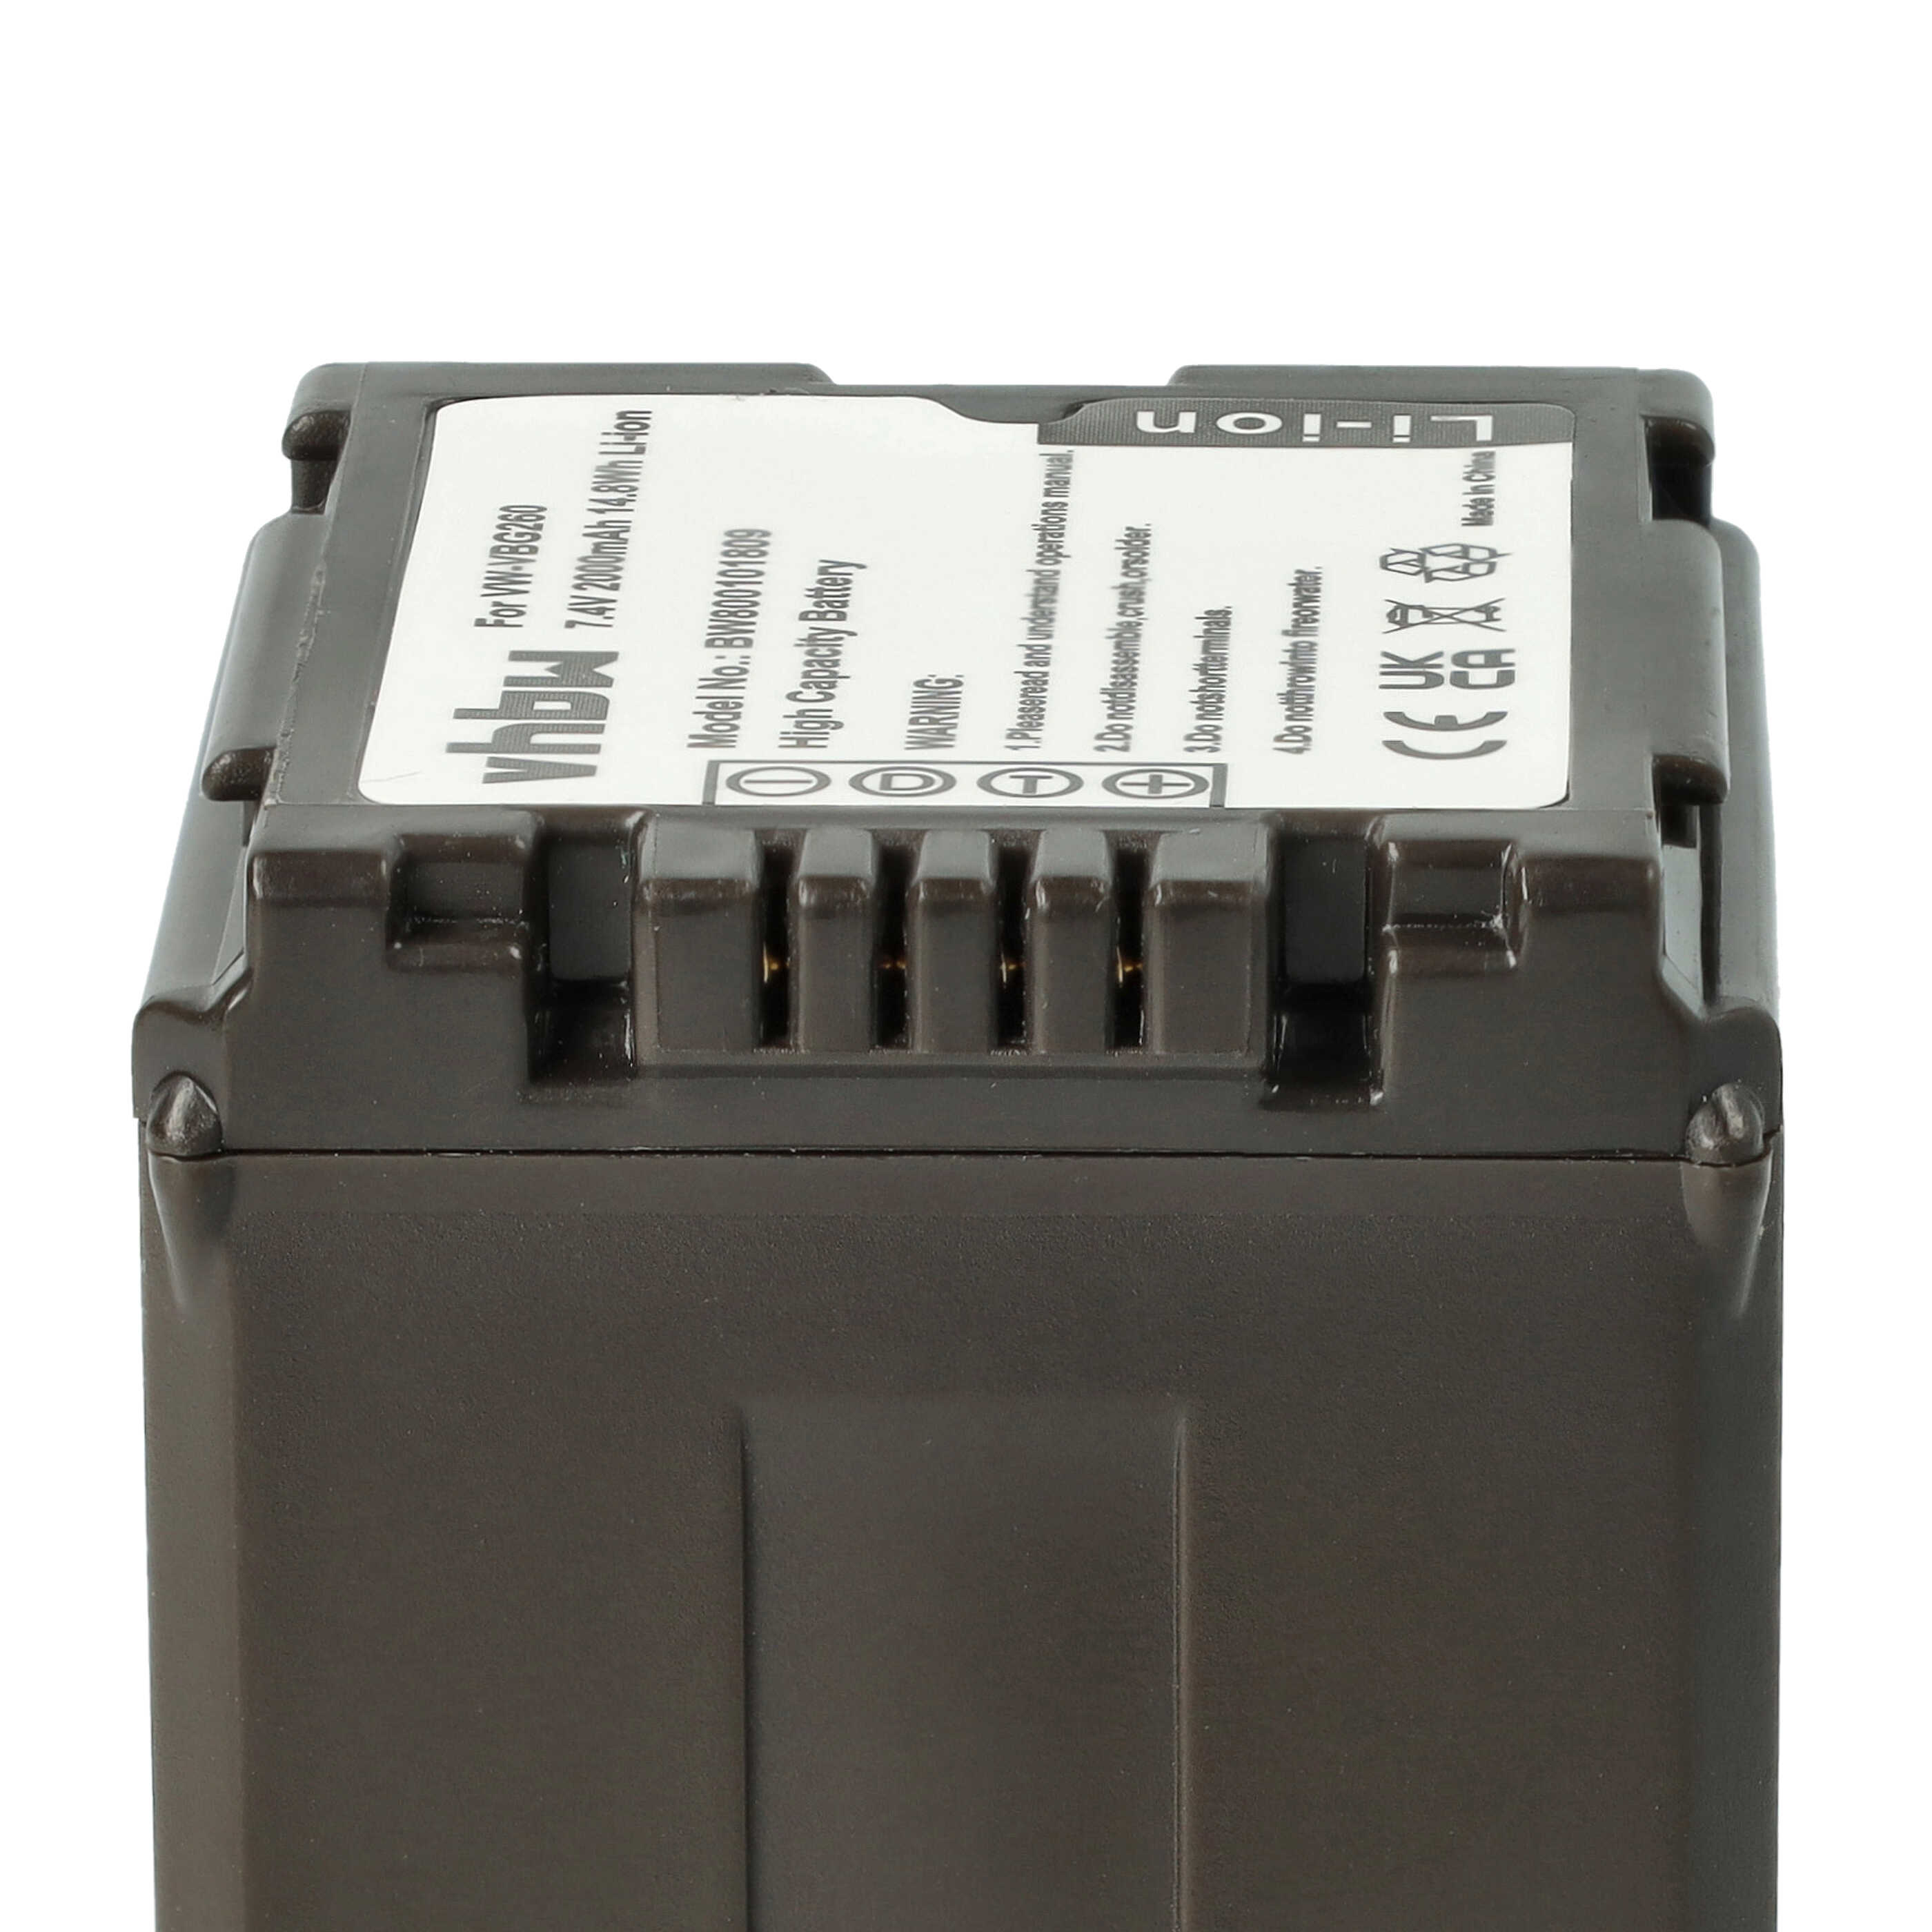 Batteria per videocamera sostituisce Panasonic VW-VBG260 Panasonic - 2000mAh 7,2V Li-Ion con infochip